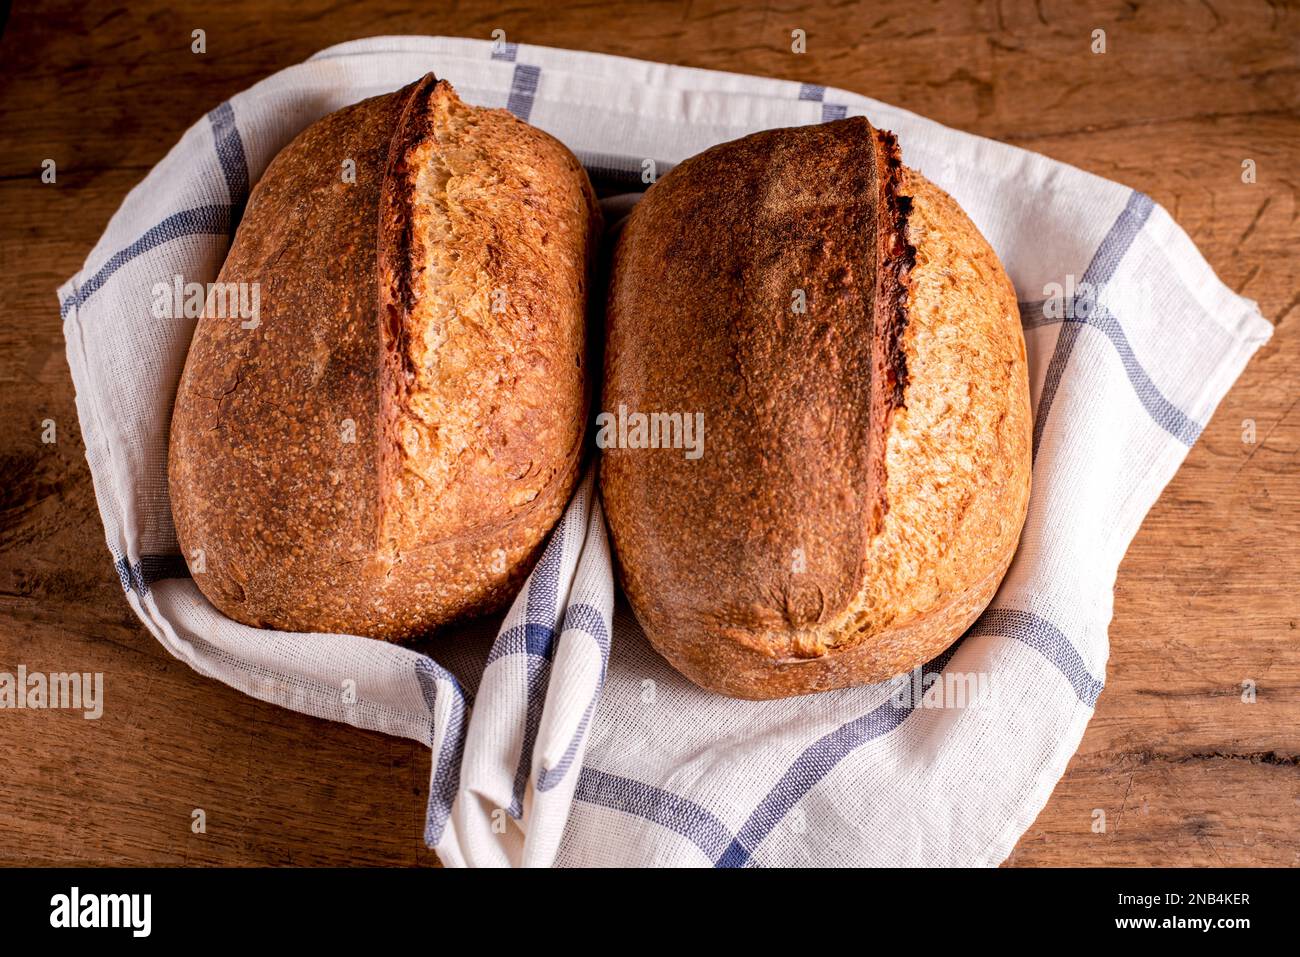 Home baked sourdough breads. Fresh, homemade sourdough breads. Stock Photo